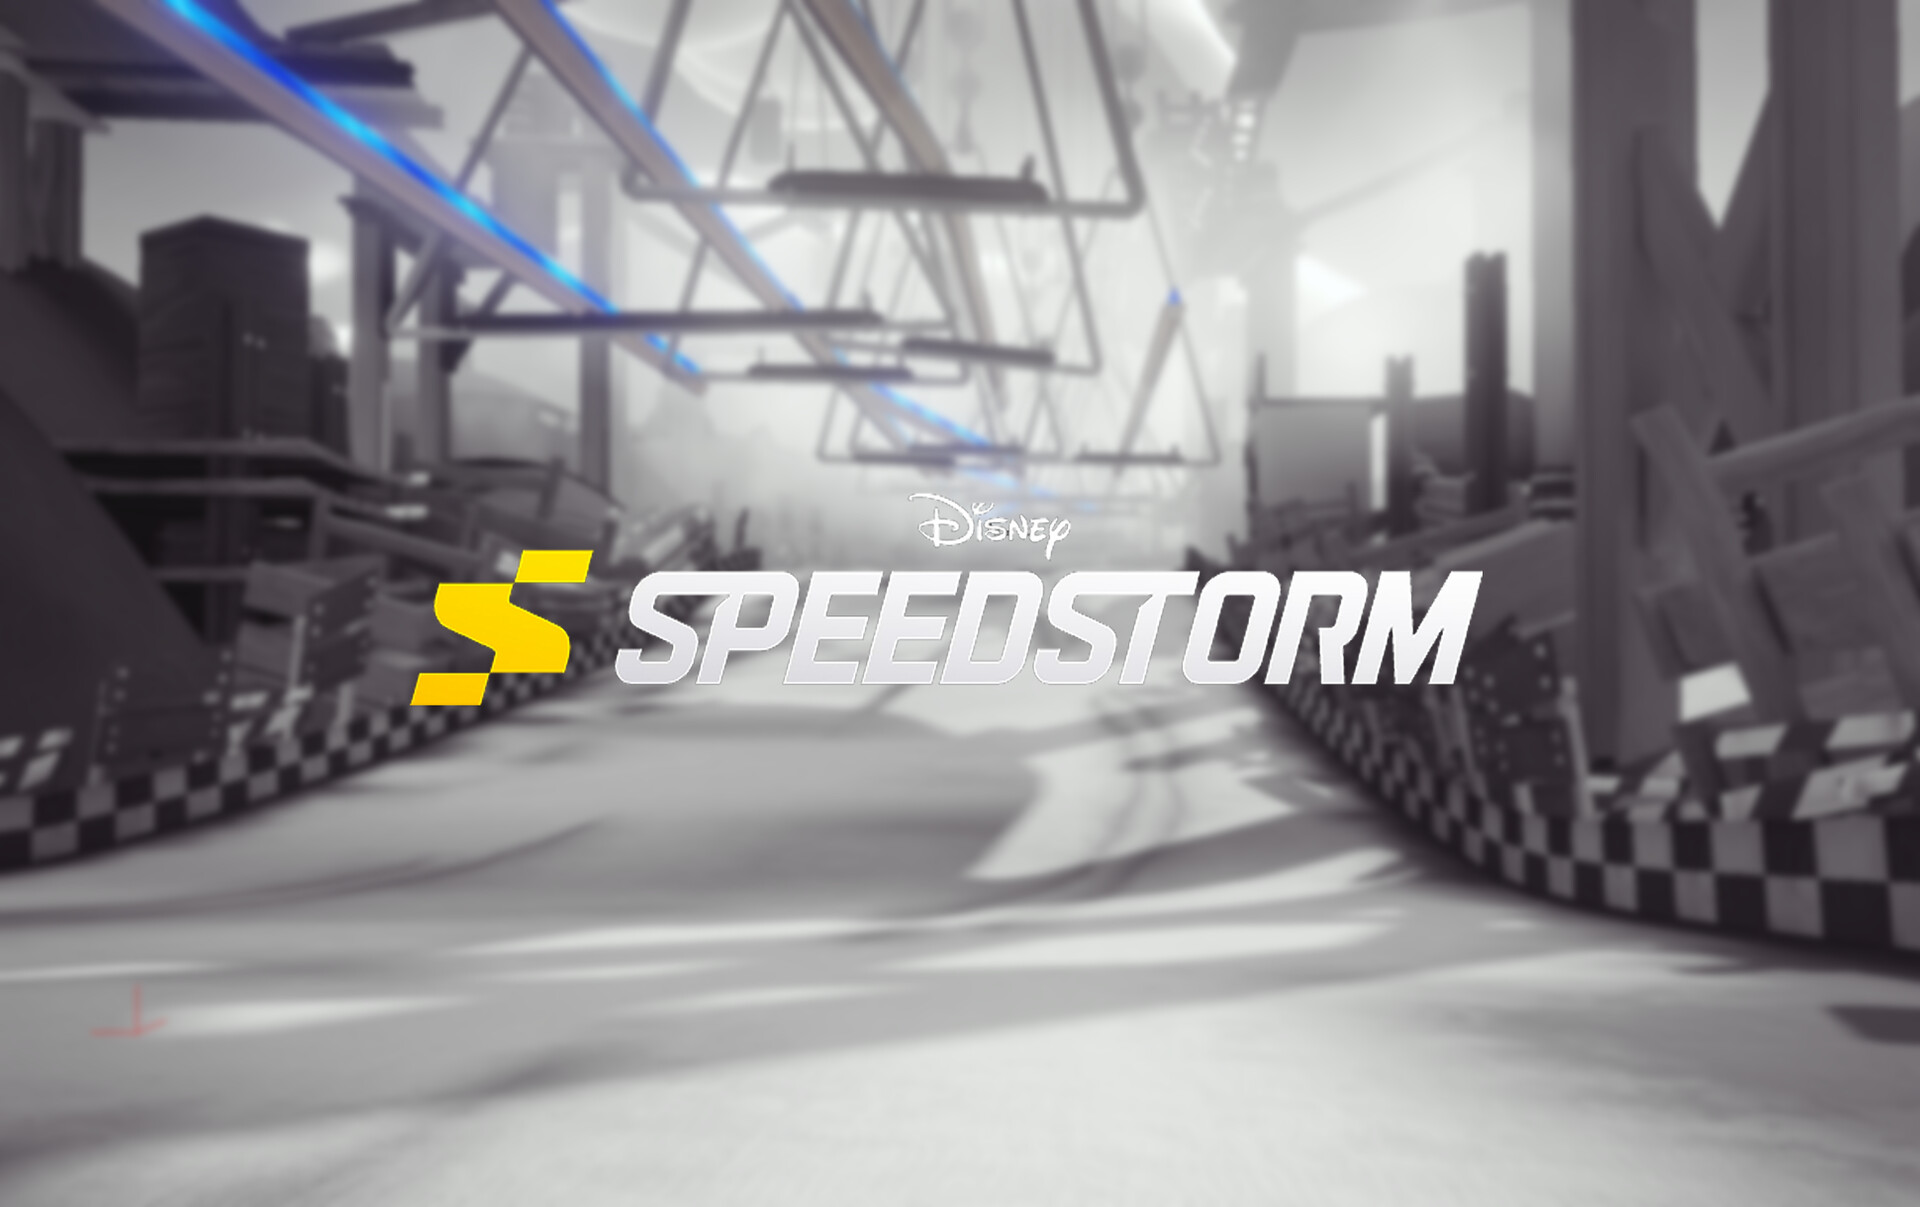 ArtStation - Disney Speedstorm - The Silver Screen